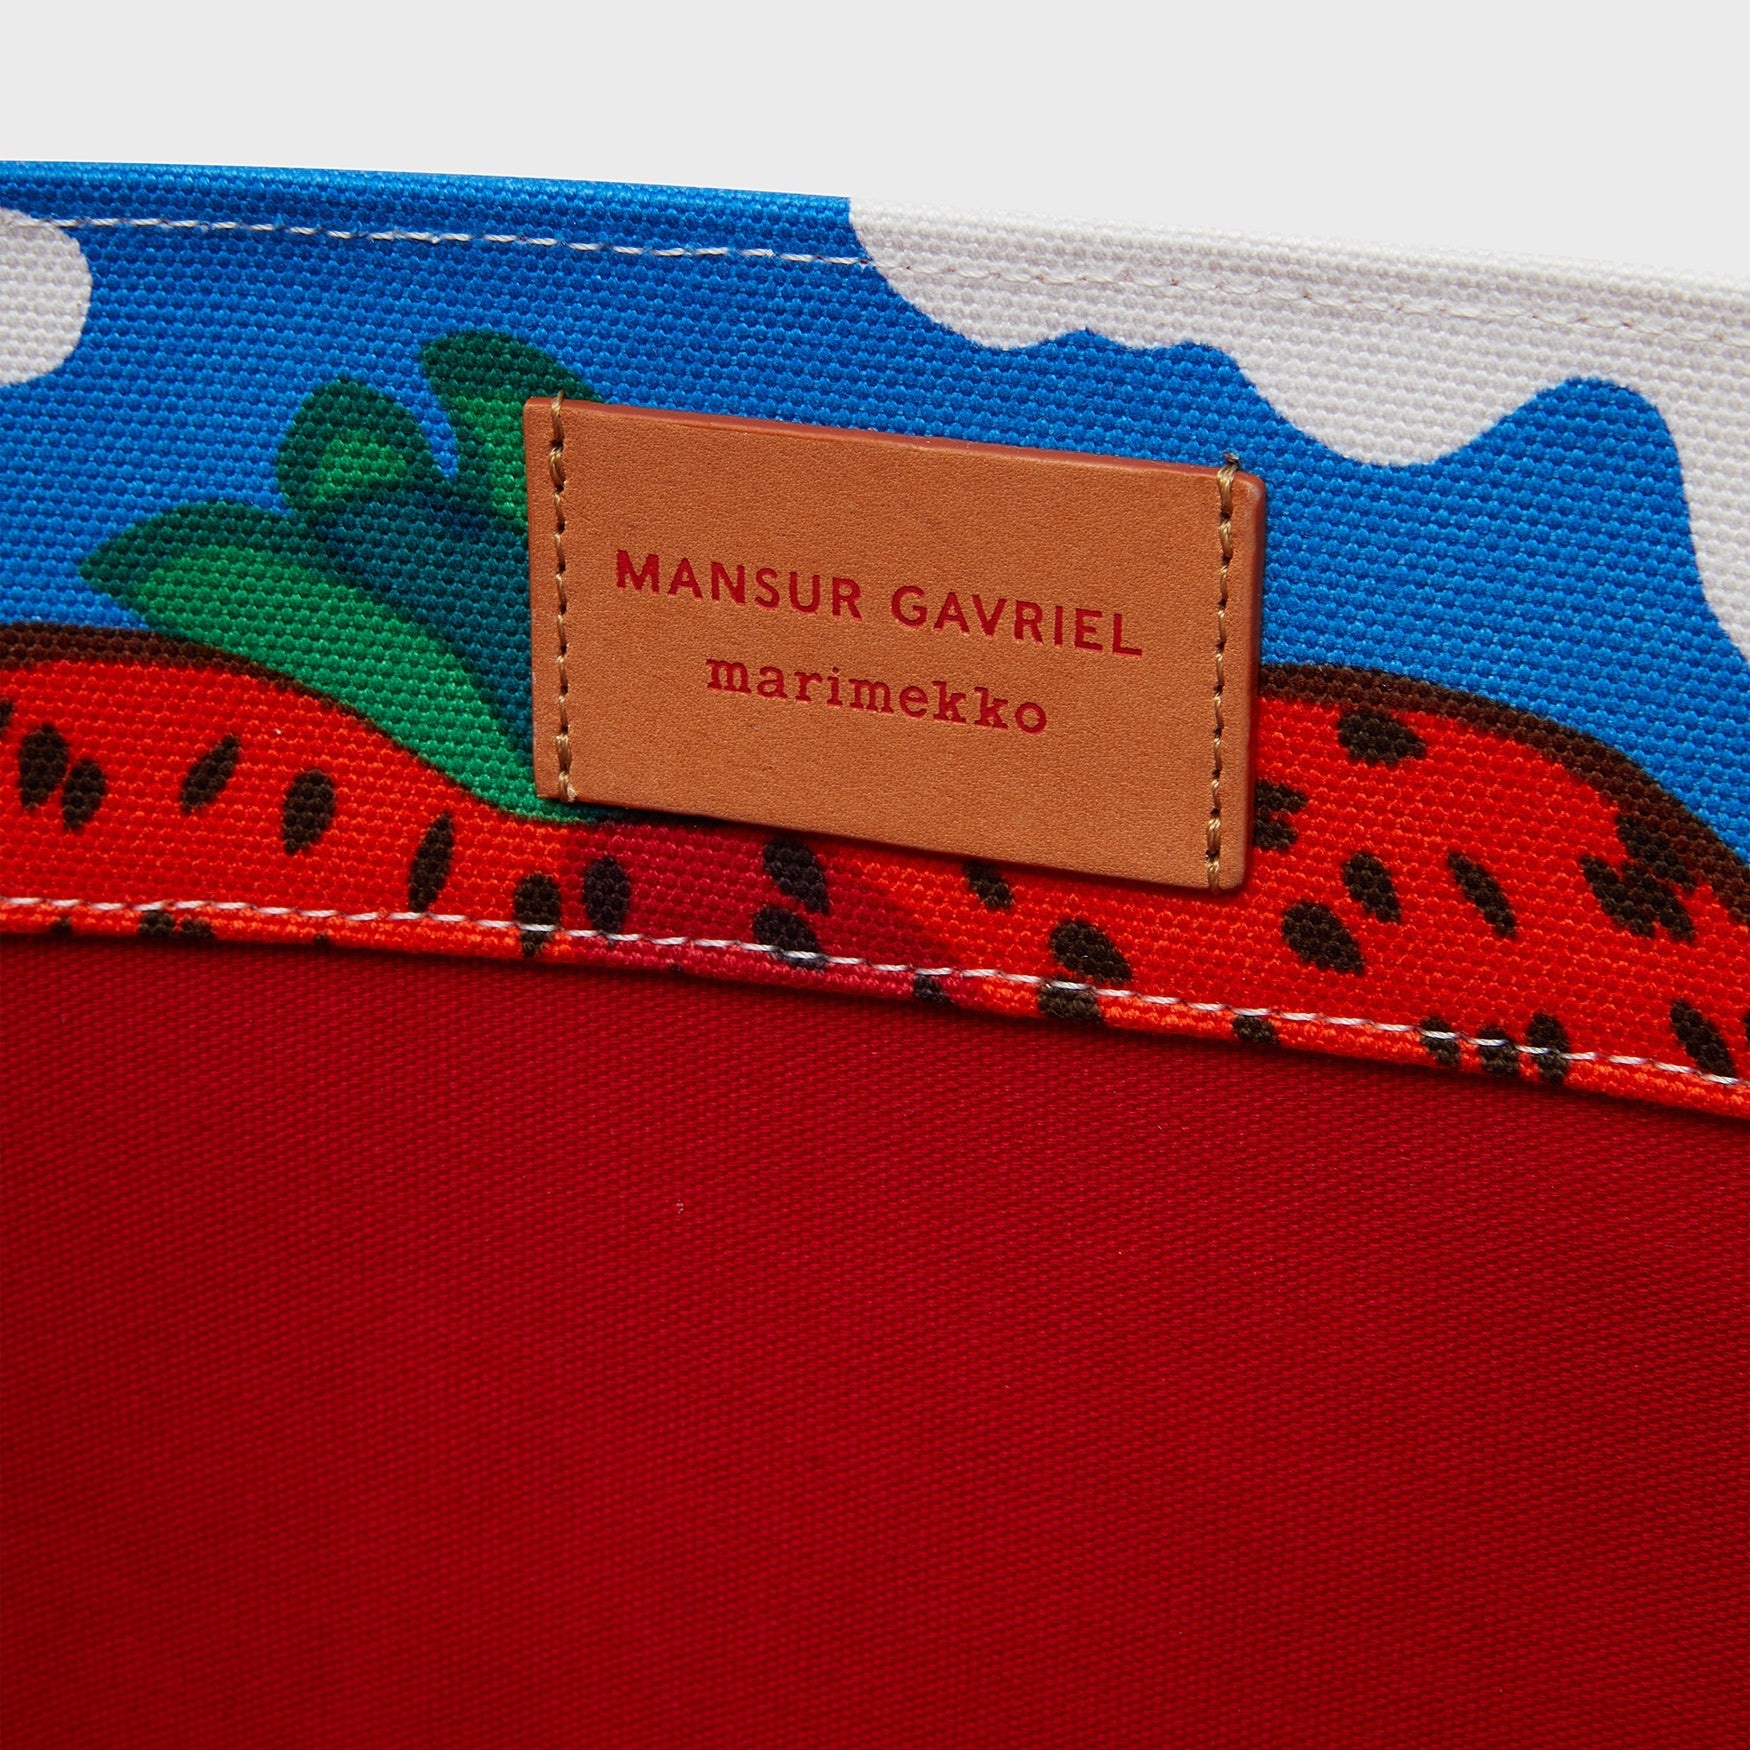 Mg X Marimekko Large Tote - Strawberry Mountain by Mansur Gavriel